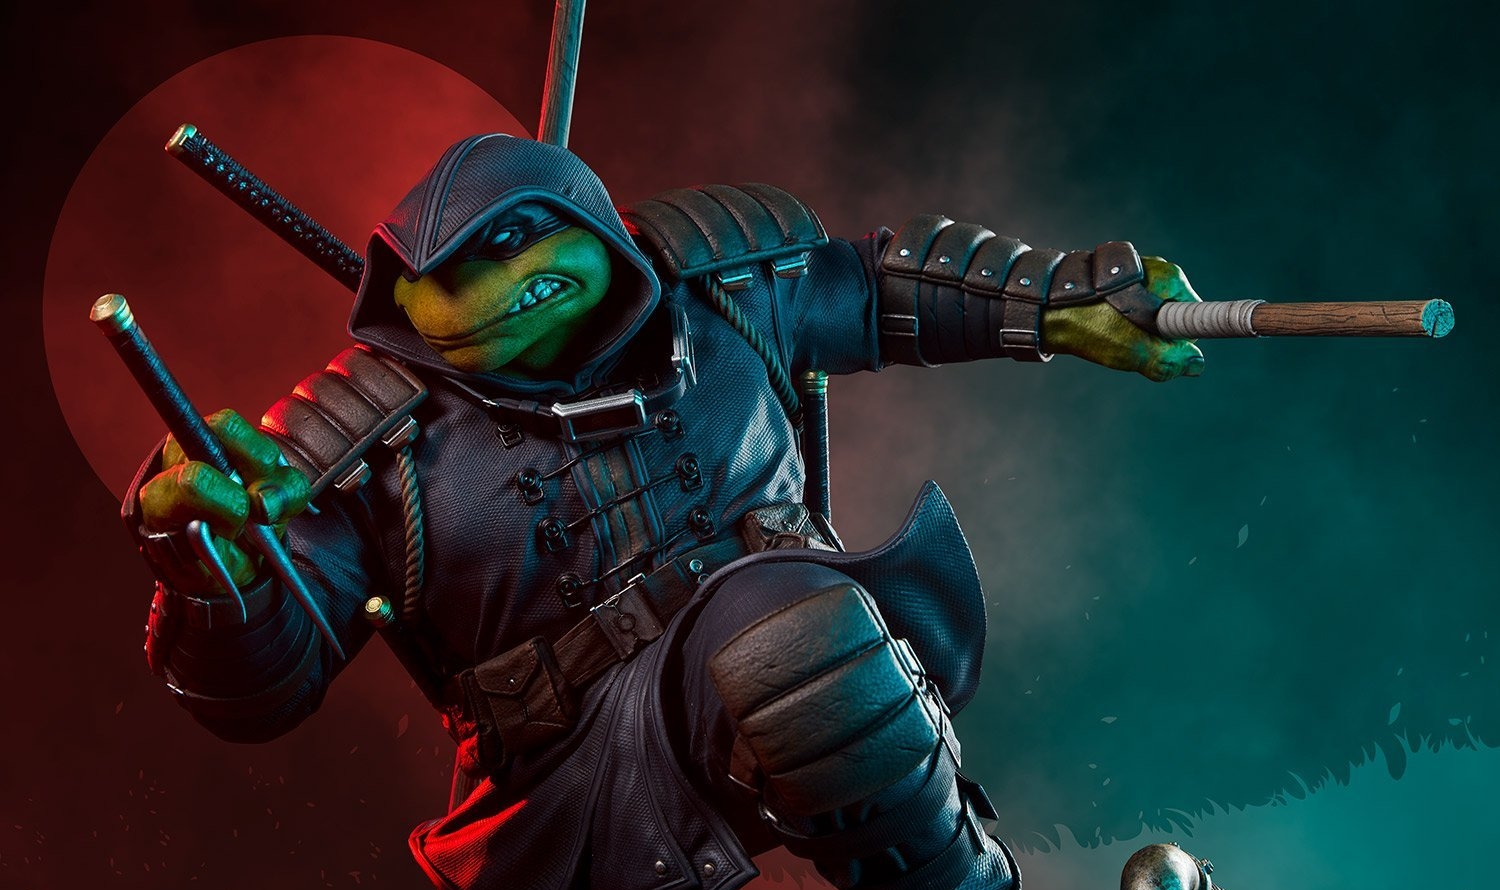 Teenage Mutant Ninja Turtles The Last Ronin Video Game in Development